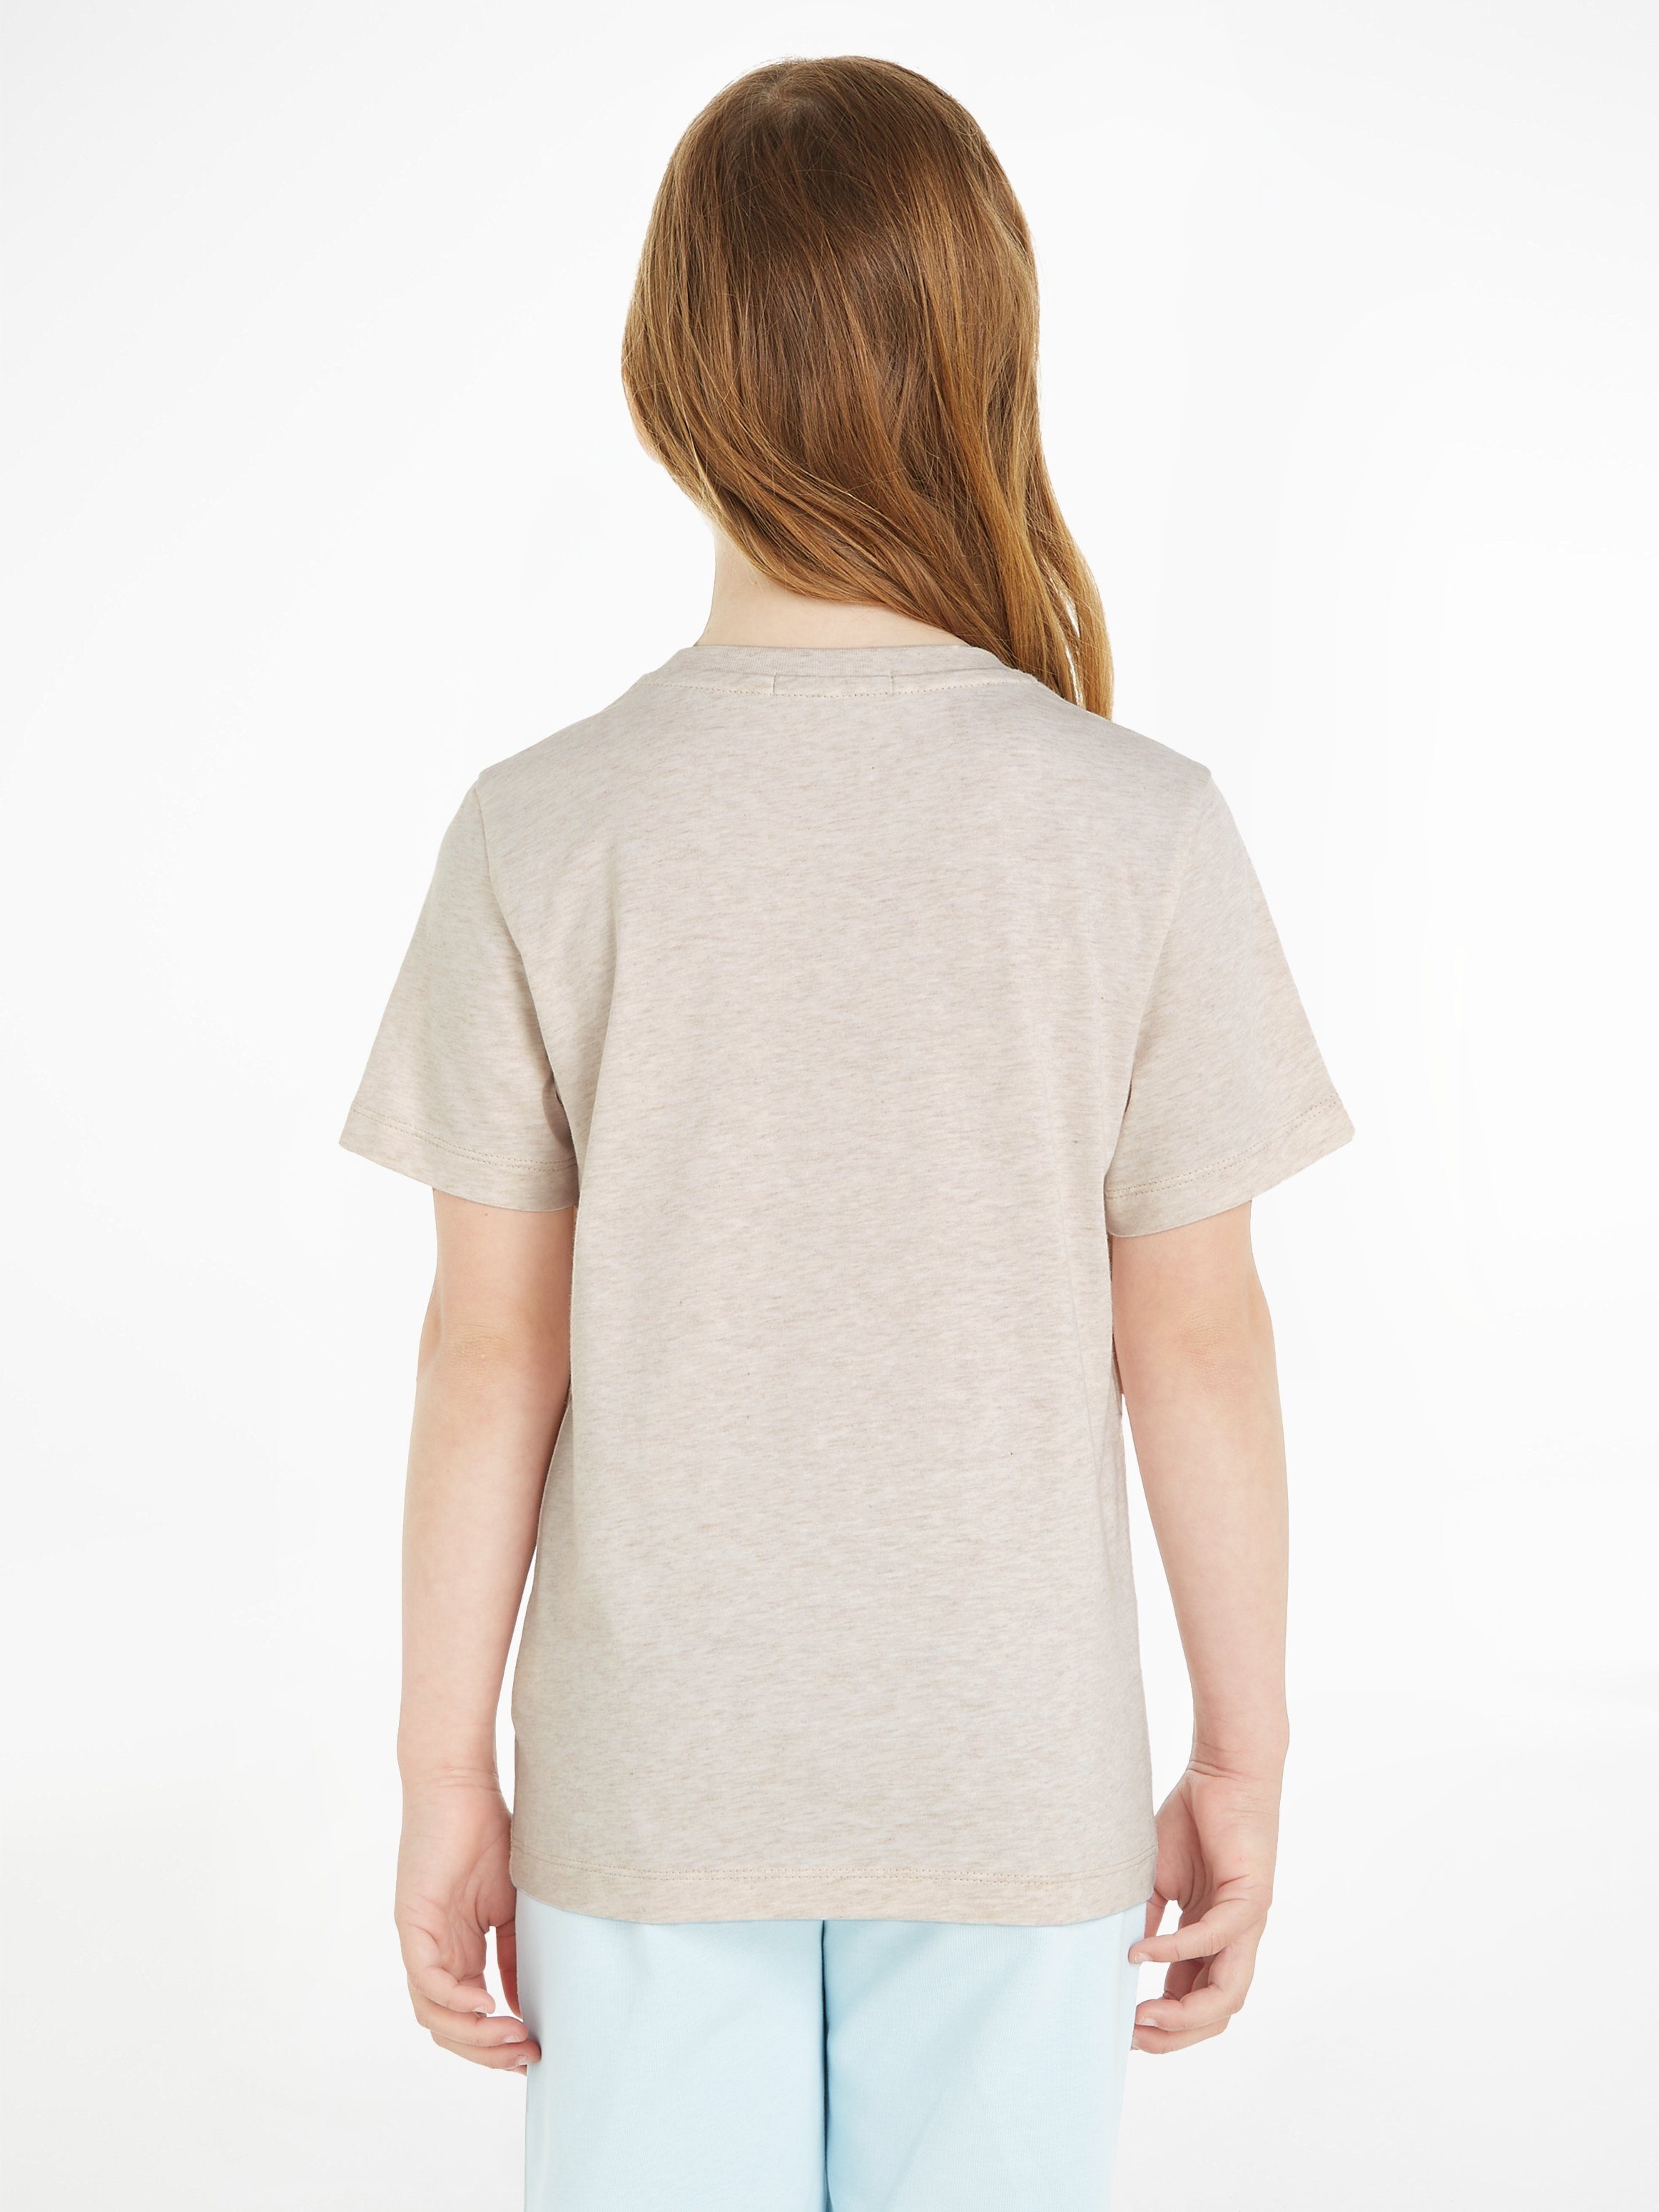 Klein Heather CK MONOGRAM T-SHIRT T-Shirt Vanilla Calvin SS Jeans